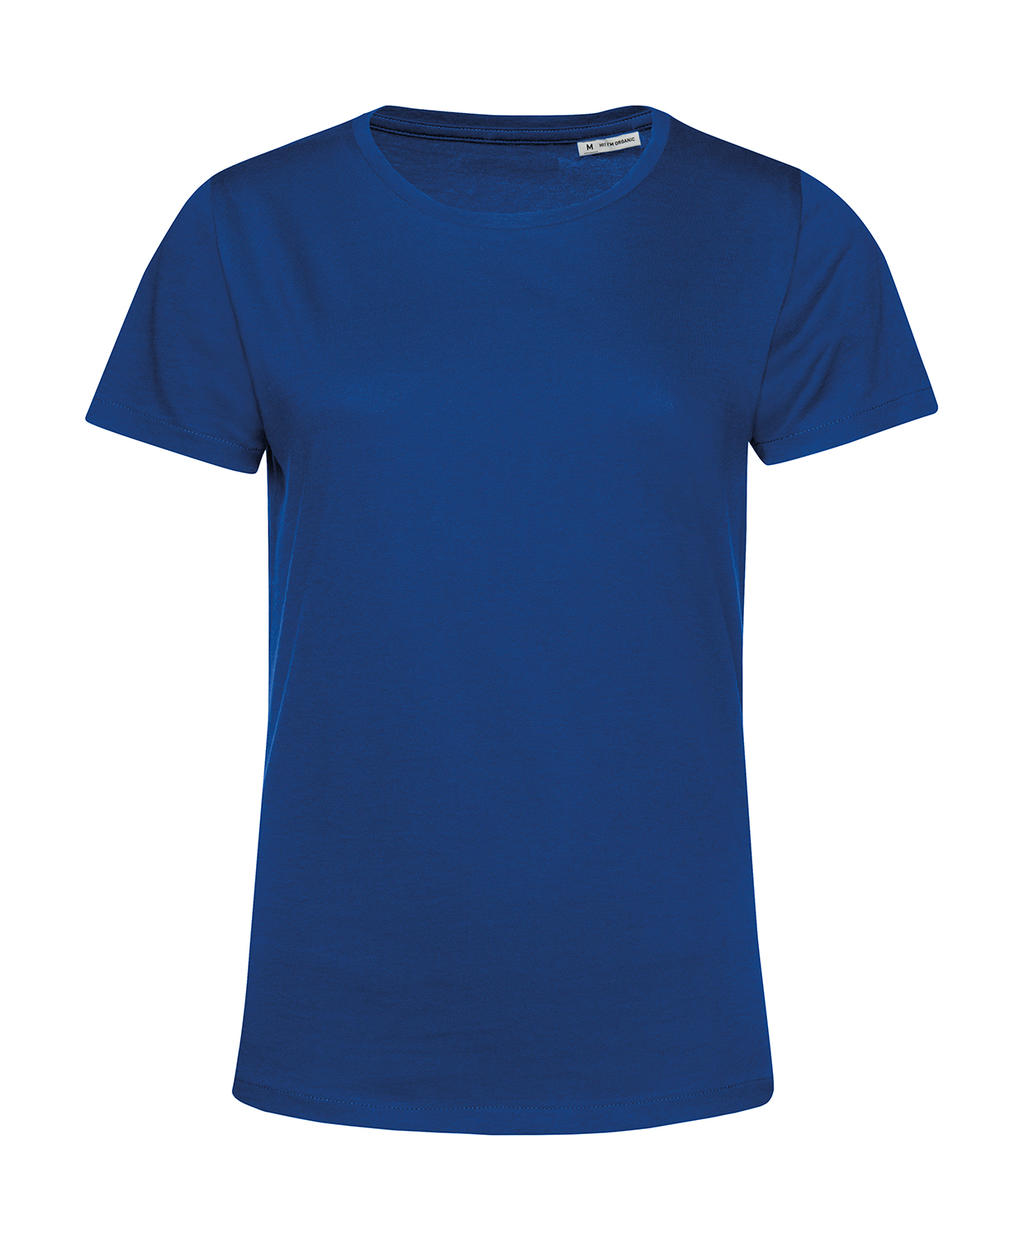 Tričko dámské BC Organic Inspire E150 - modré, XXL